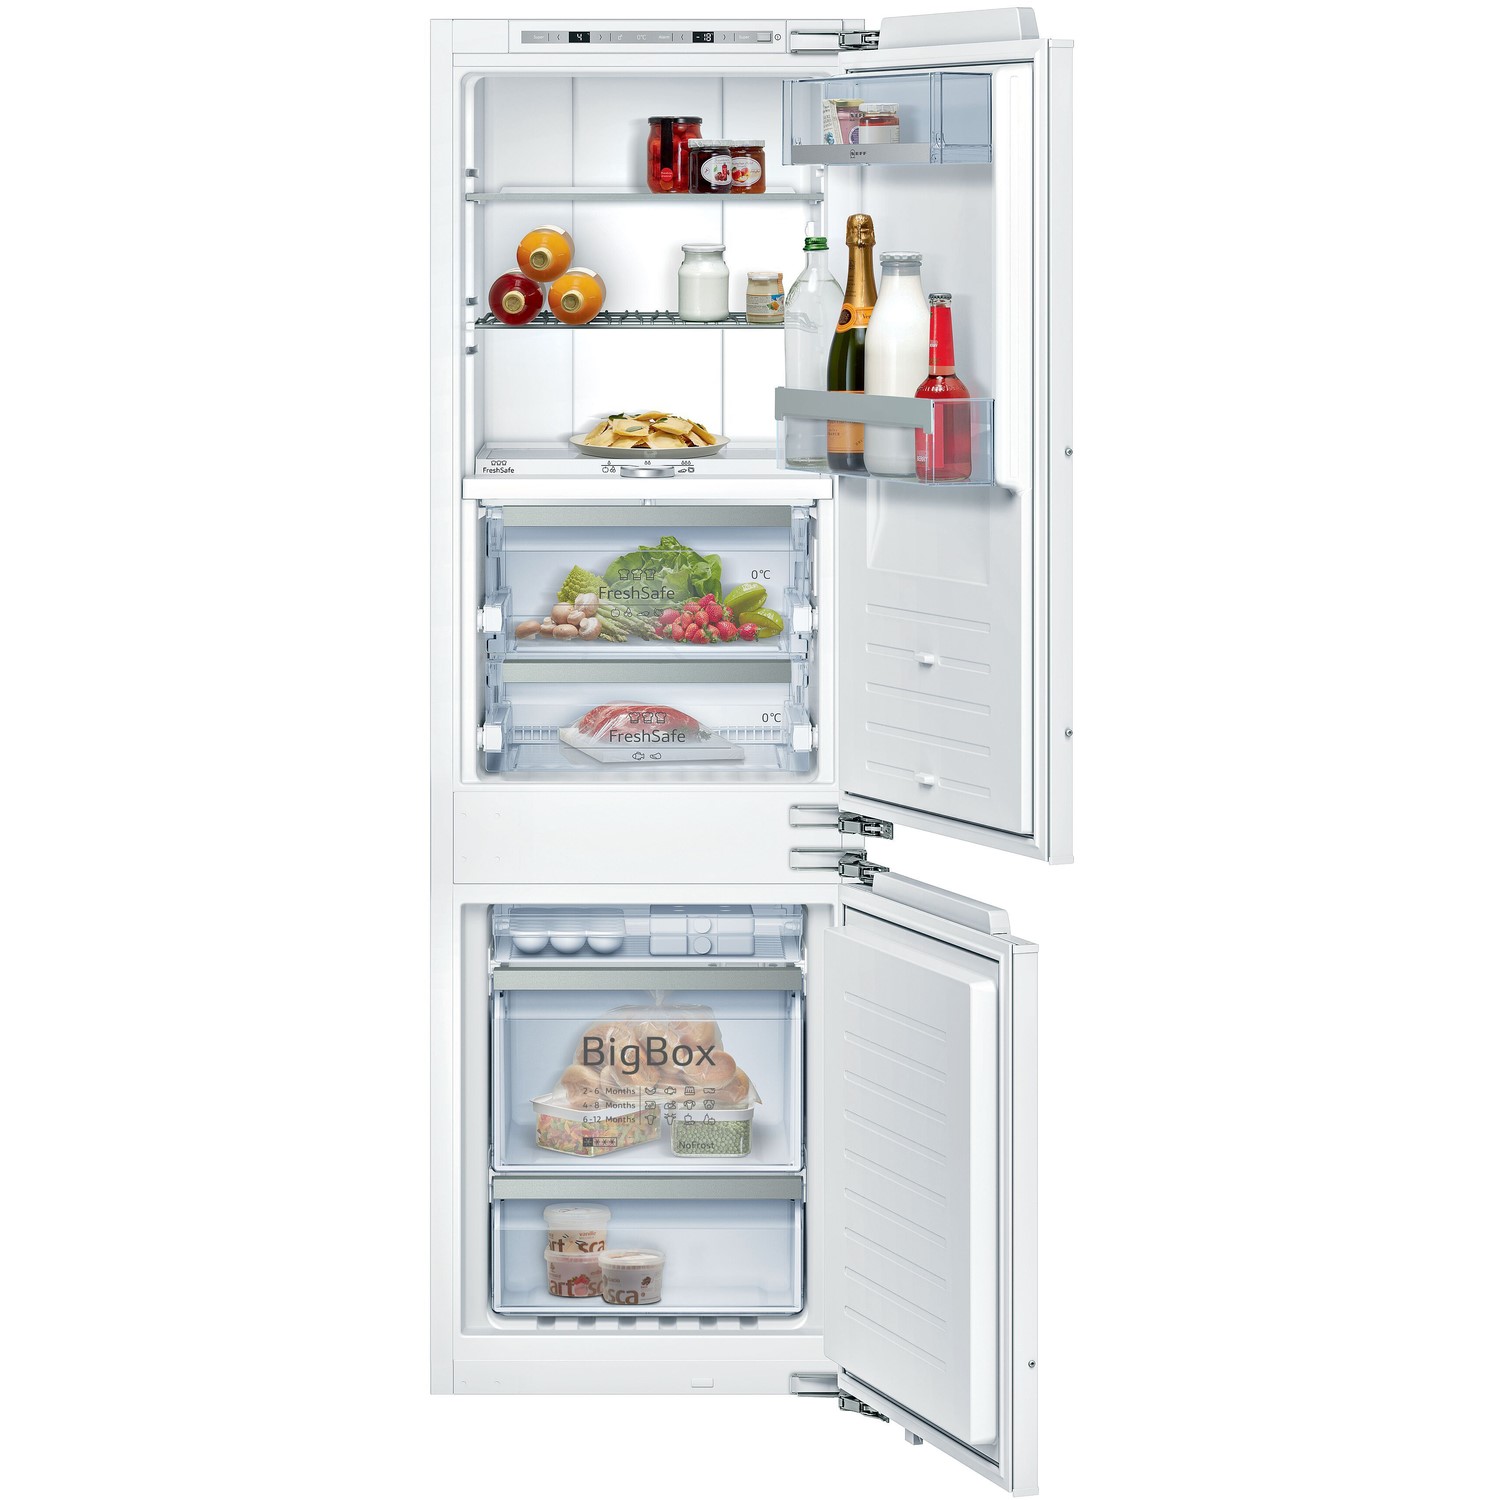 Neff KI8865DE0 N90 70/30 Integrated Fridge Freezer With FreshSafes